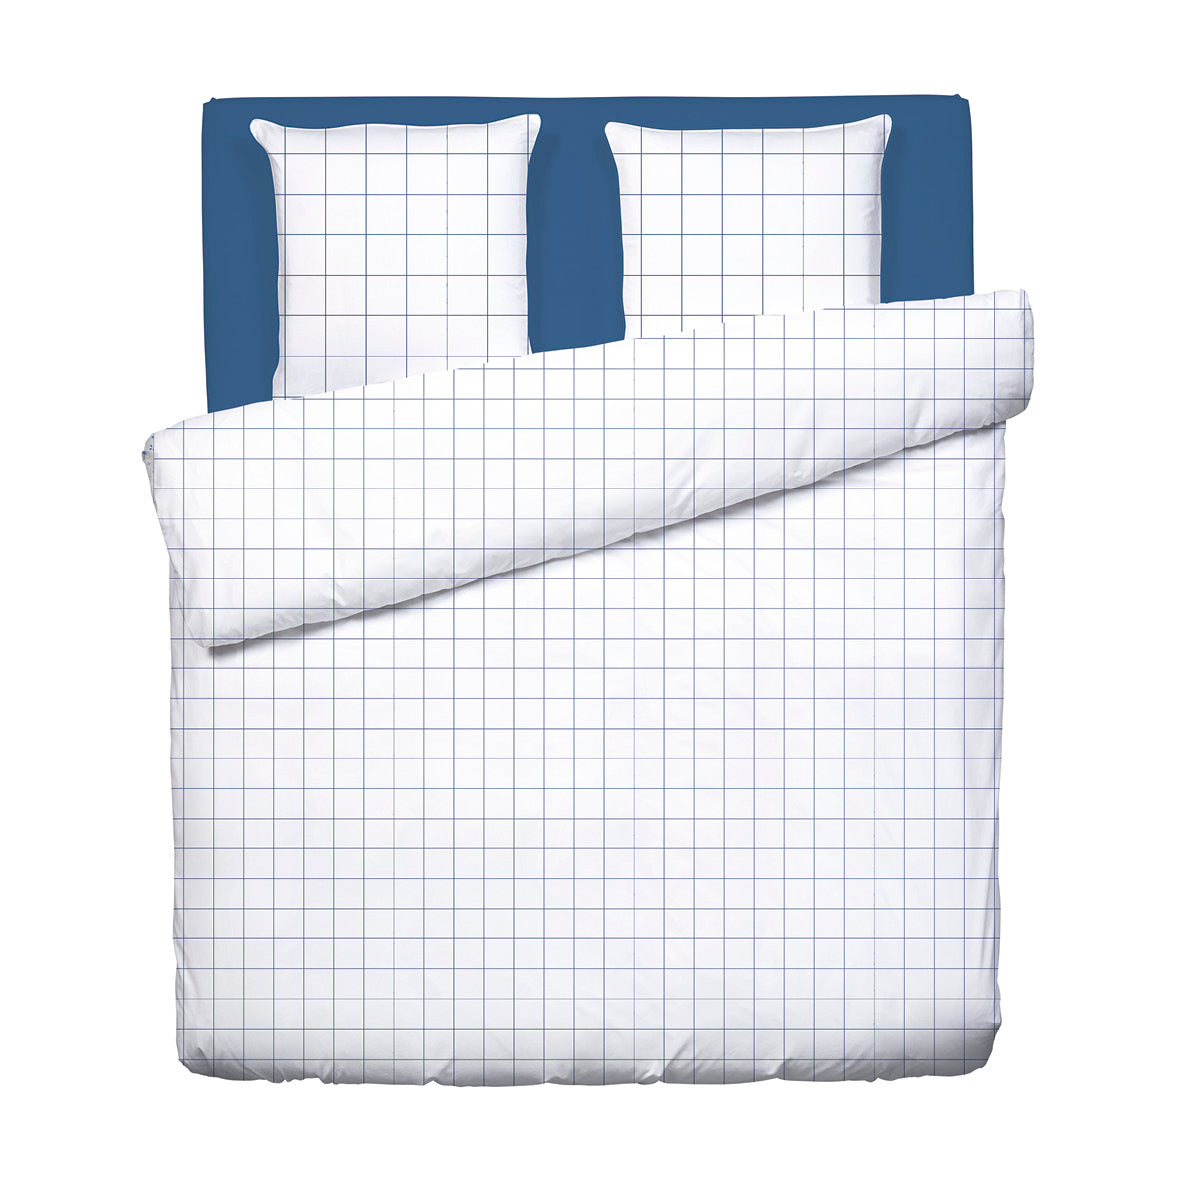 Duvet cover + pillowcase(s) cotton satin - Carreaux white